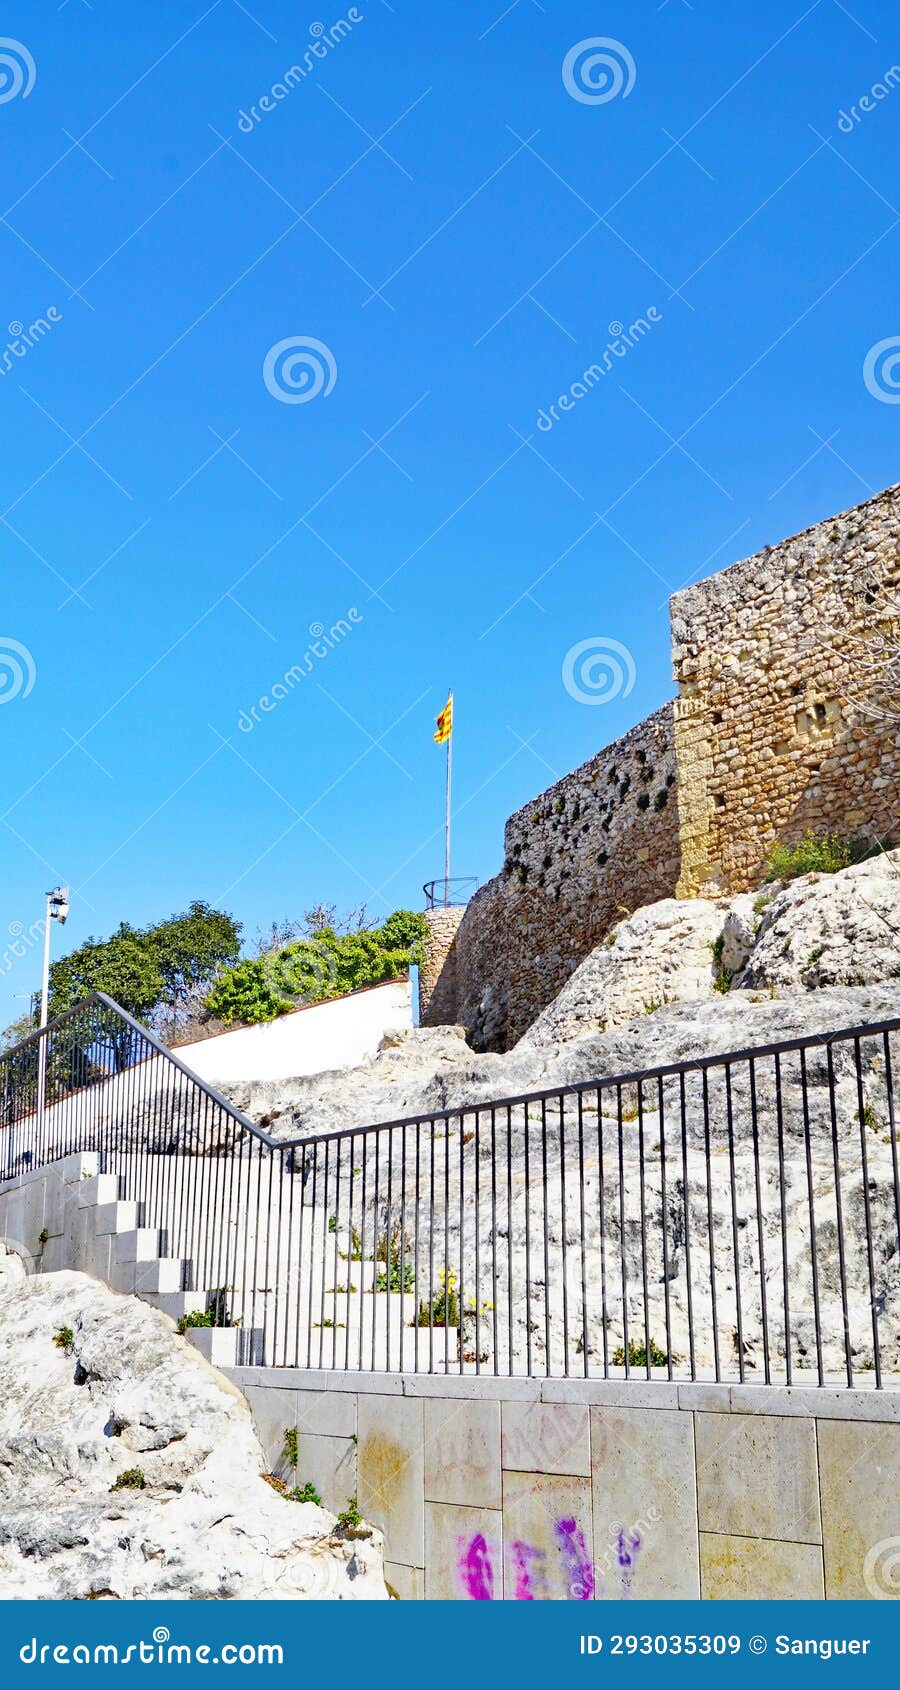 the santa creu castle in calafell, costa dorada, tarragona